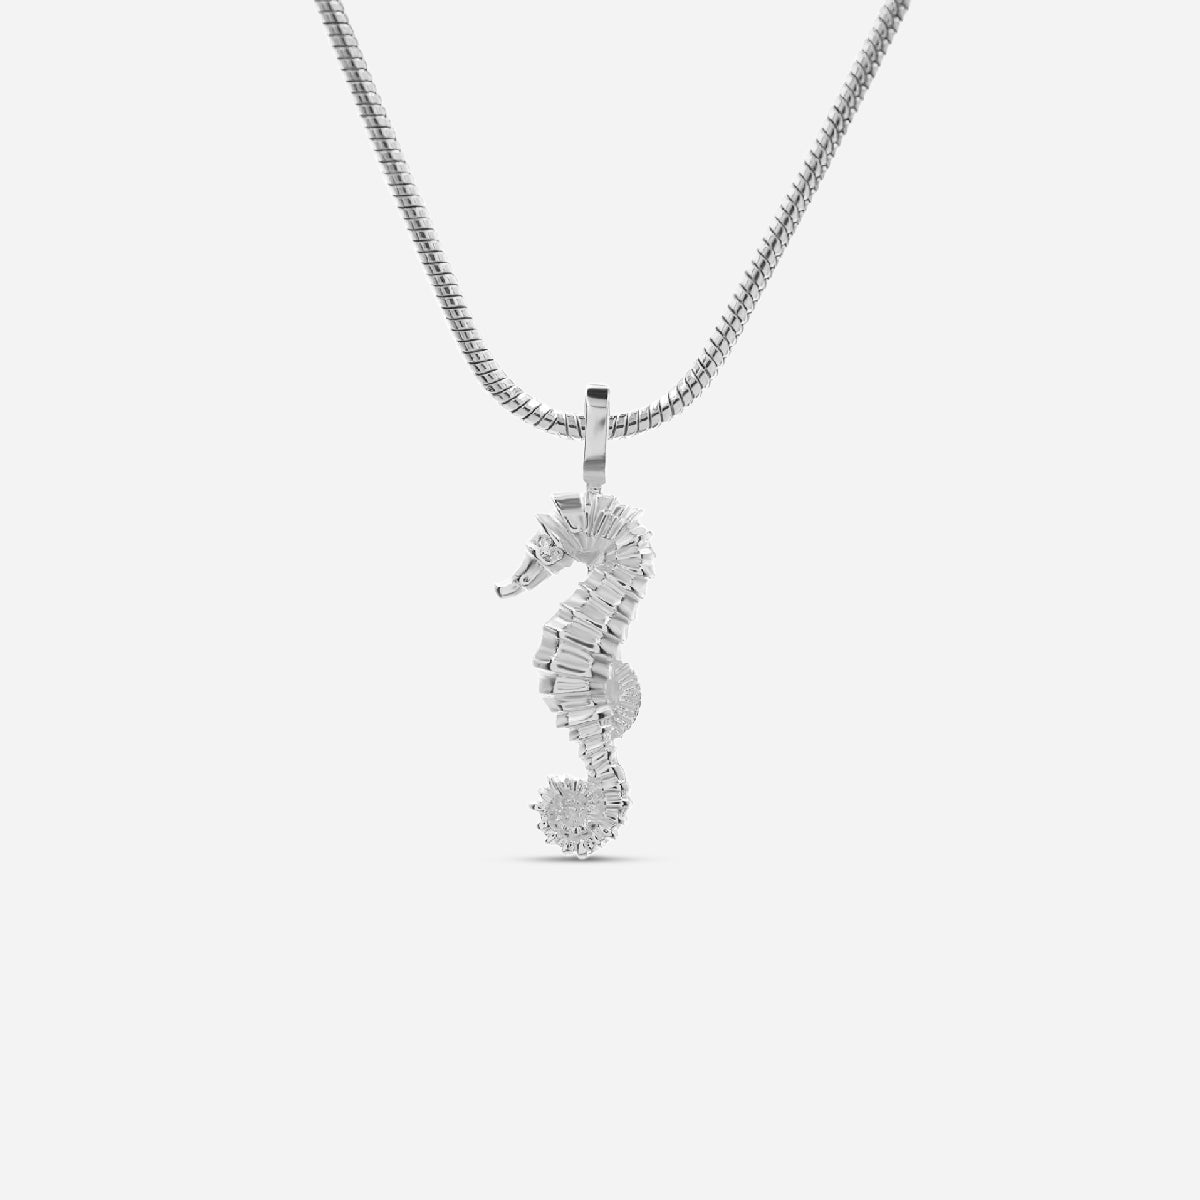 Kids necklace "Seahorse" - silver